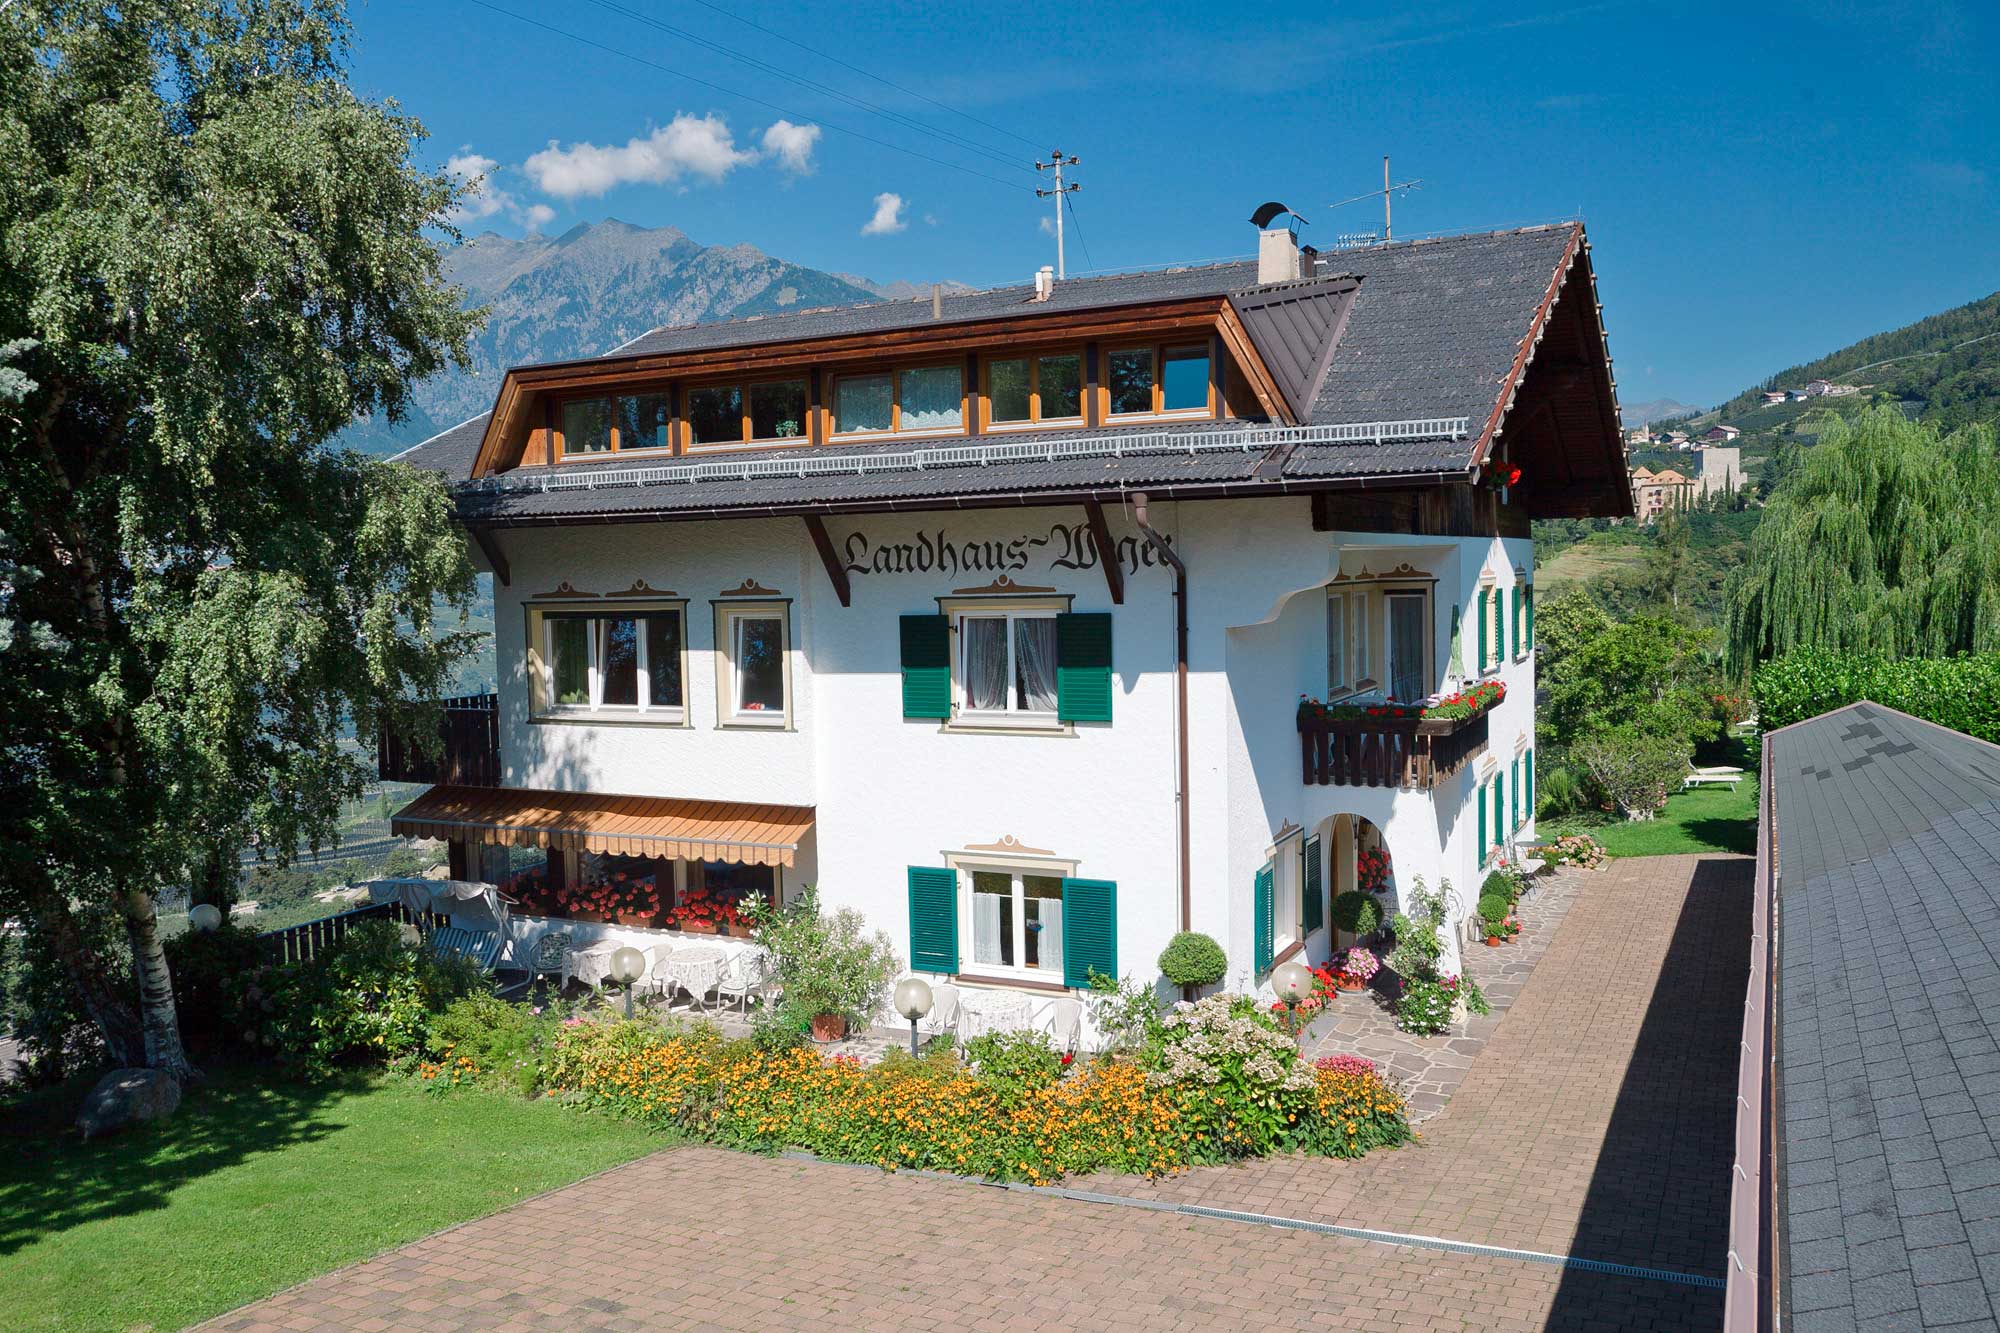 Landhaus Weger a Merano, Sudtirolo